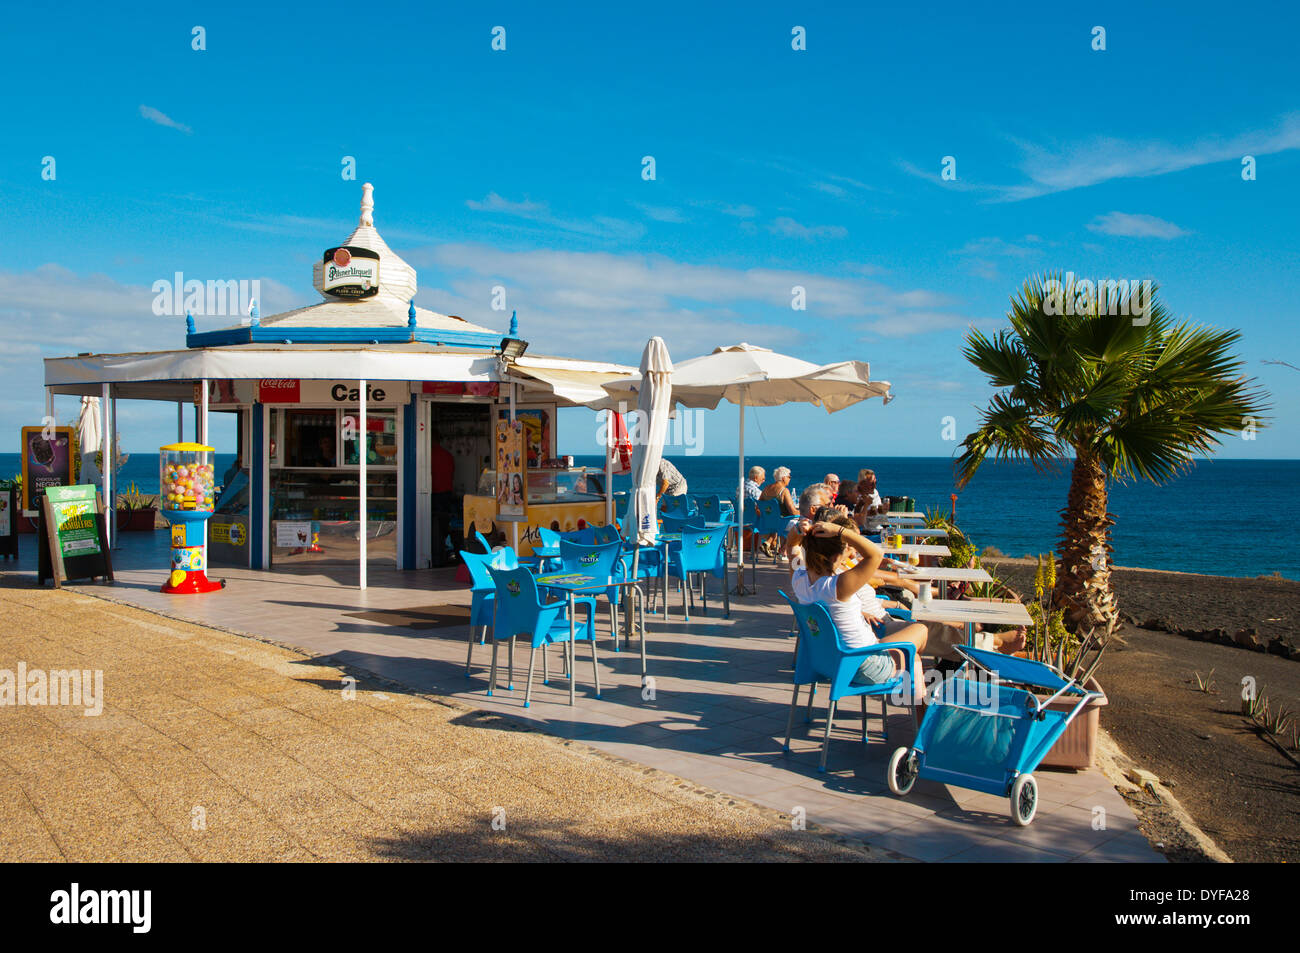 Cafe kiosk with a view, Avenida de las Playas main street, Puerto del Carmen, Lanzarote, Canary Islands, Spain, Europe Stock Photo